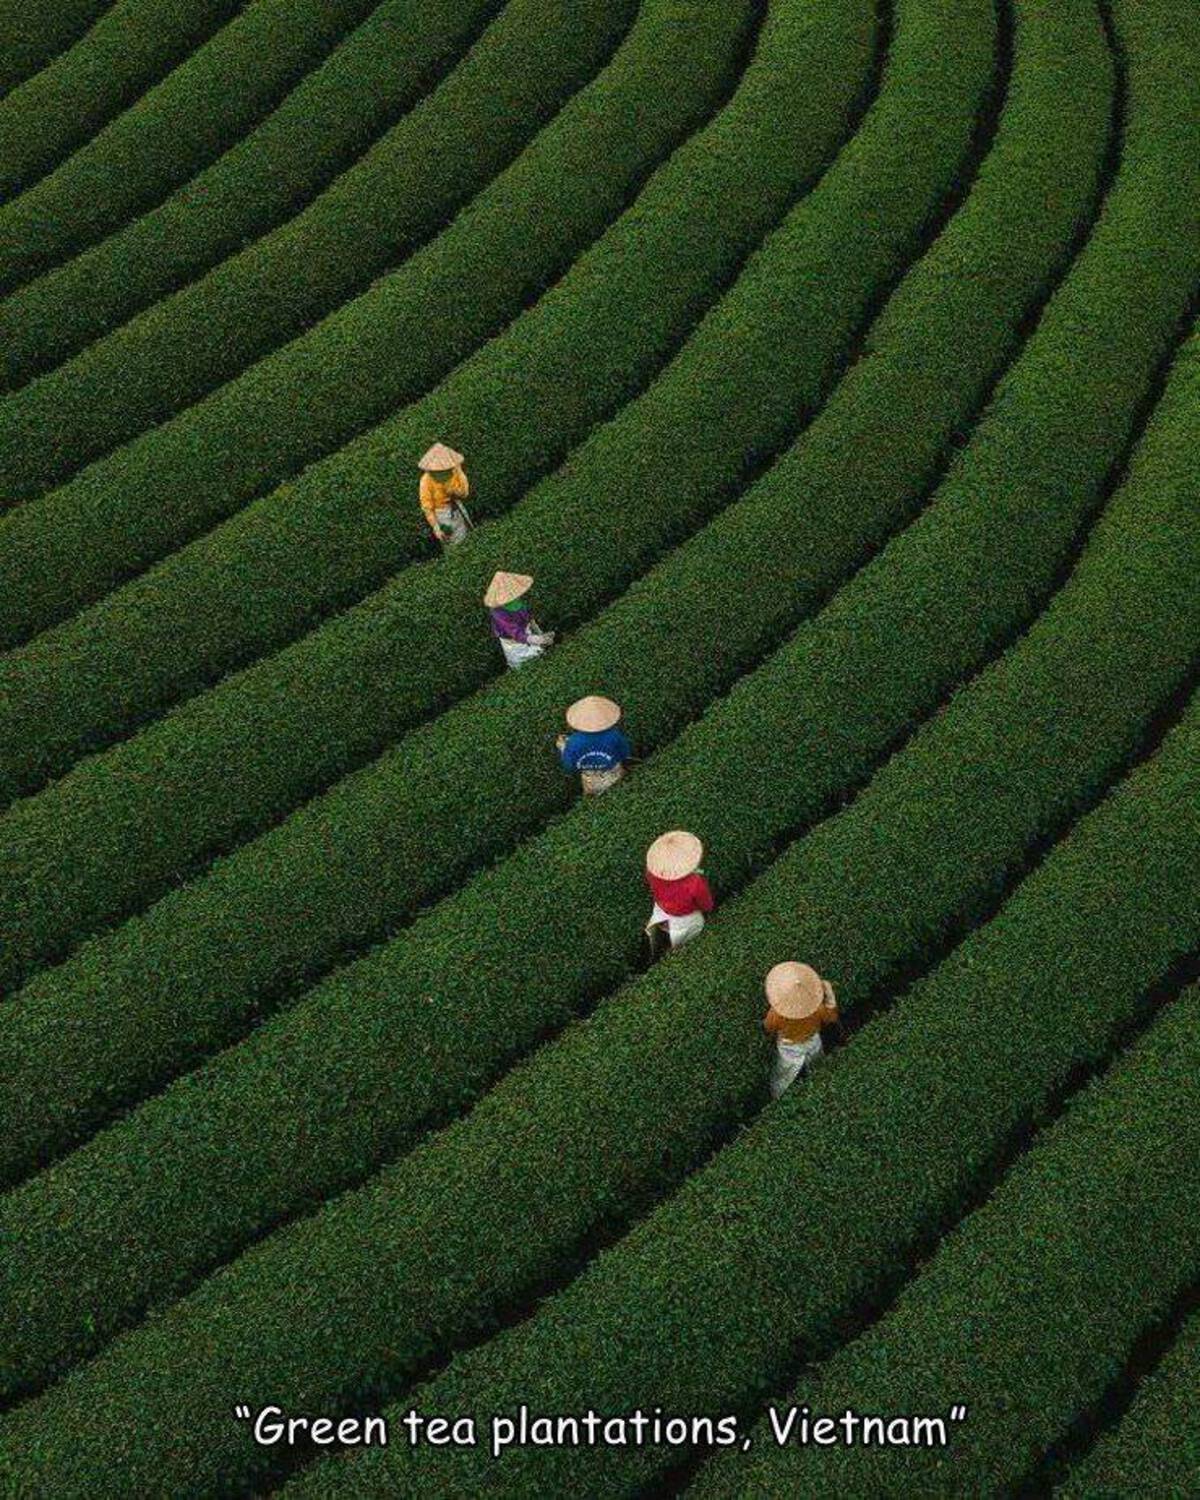 field - "Green tea plantations, Vietnam"